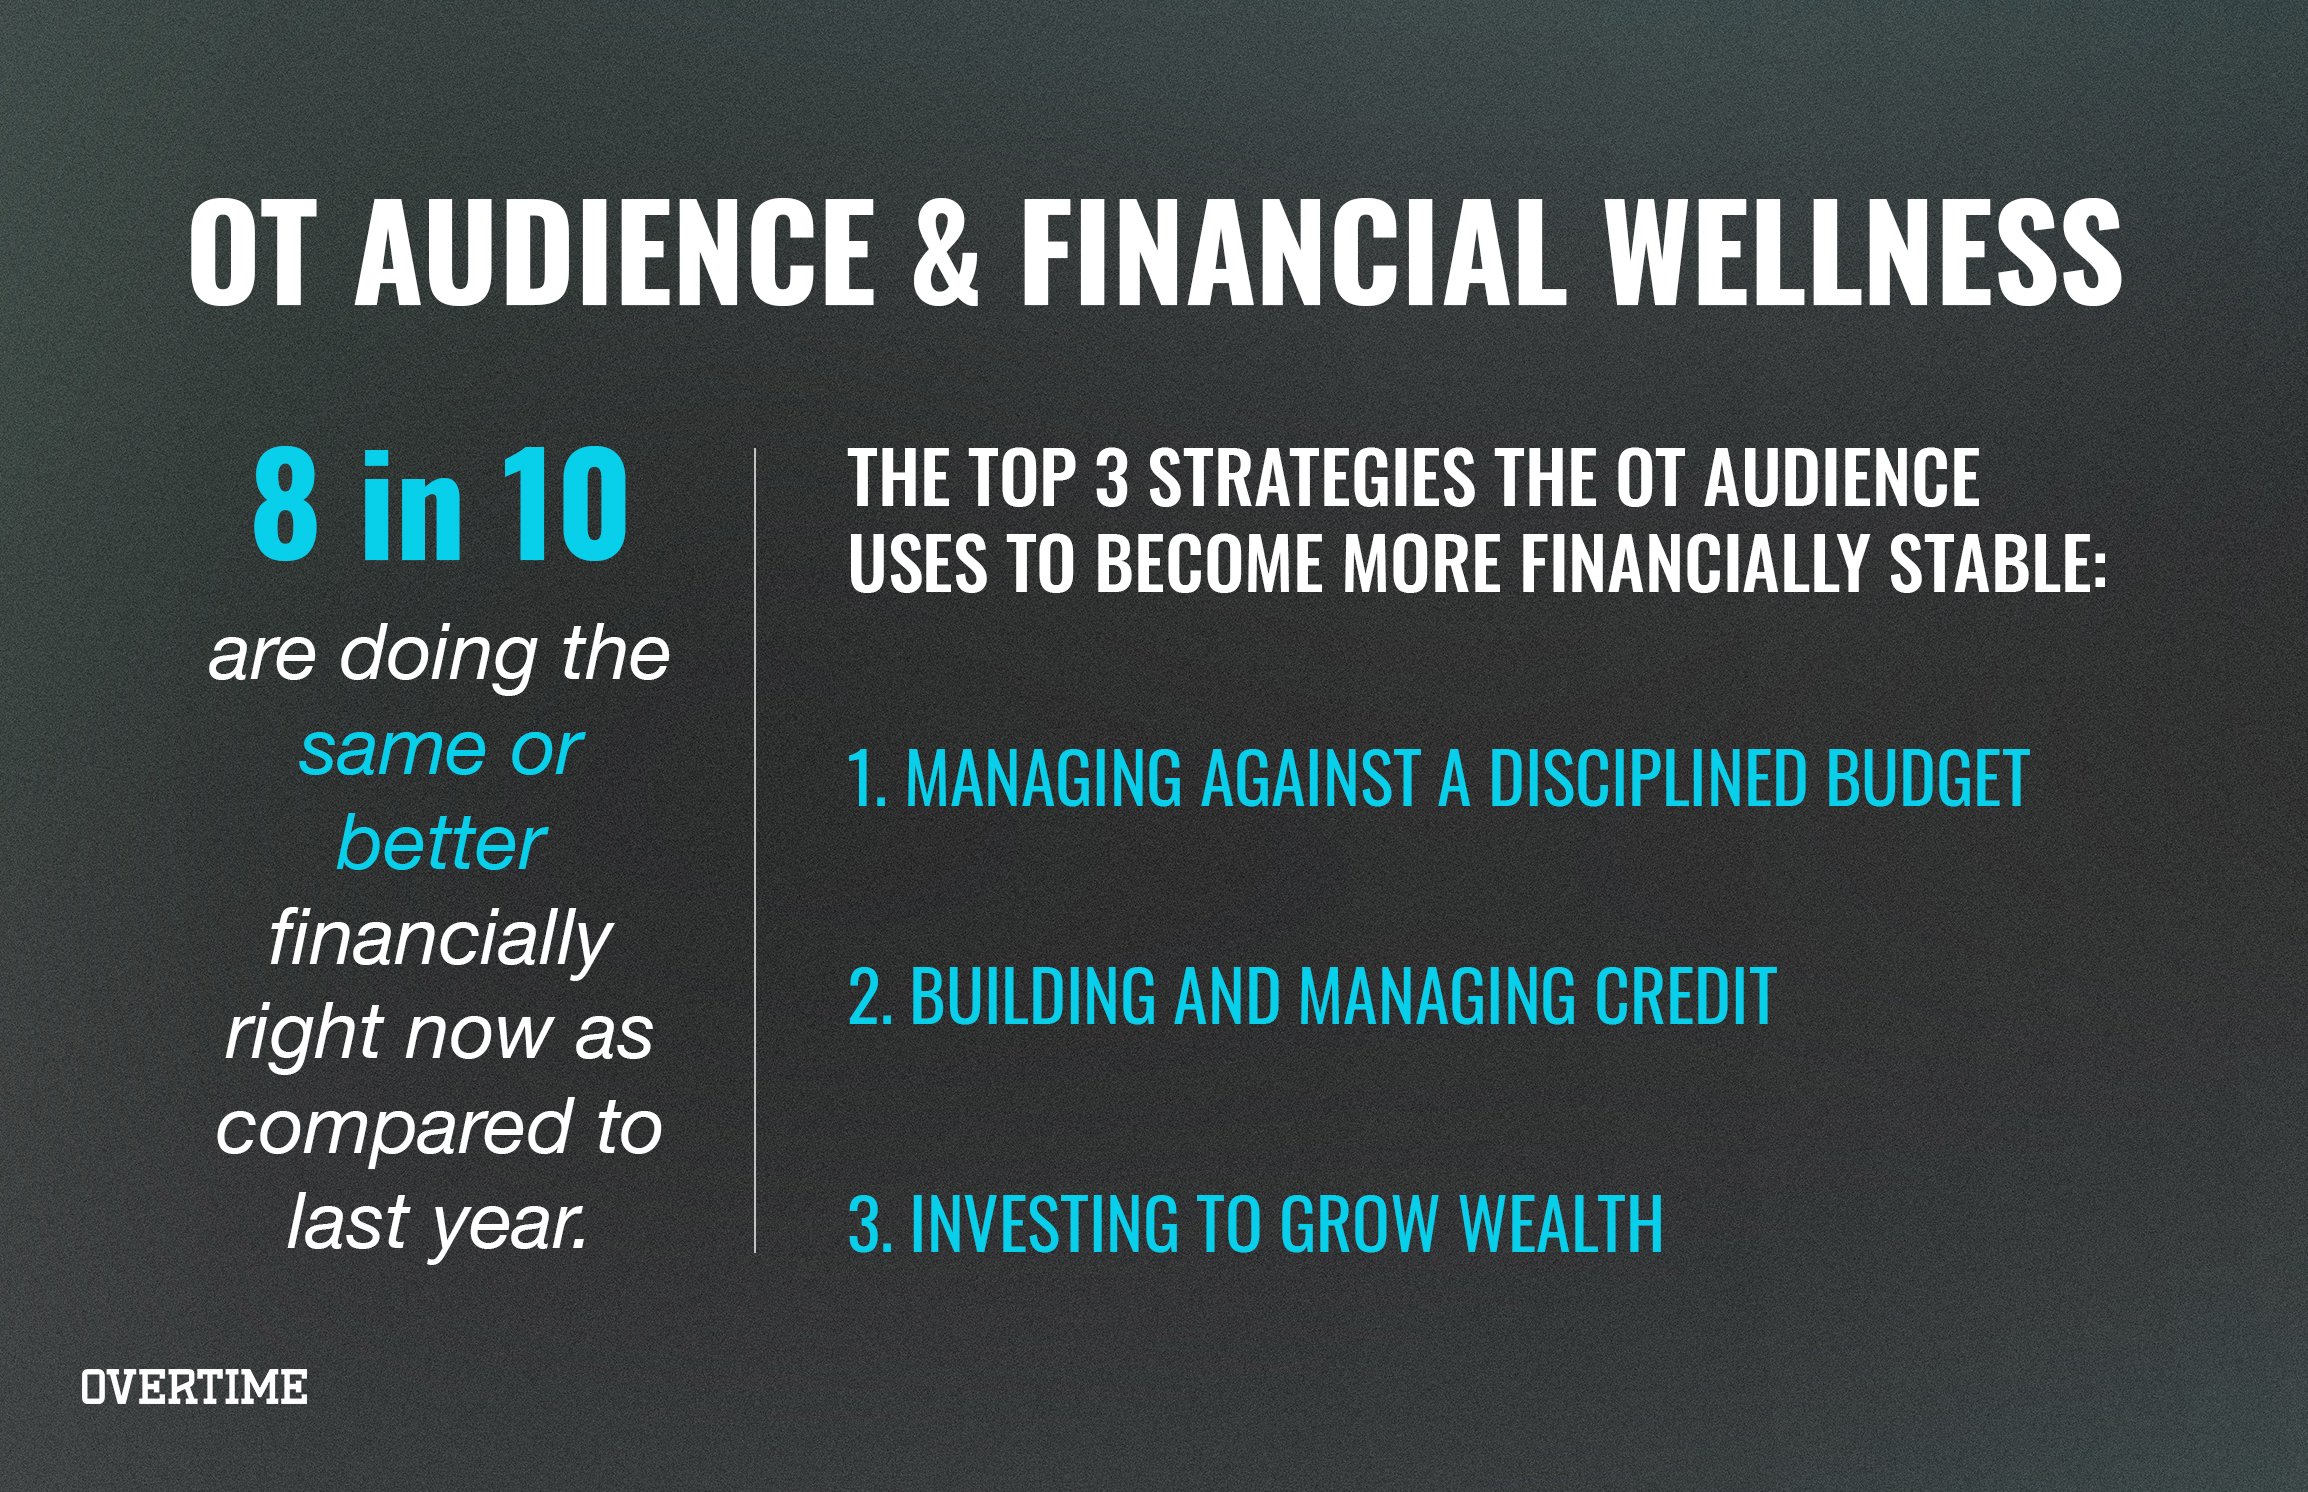 OT audience & financial wellness graphic.jpg